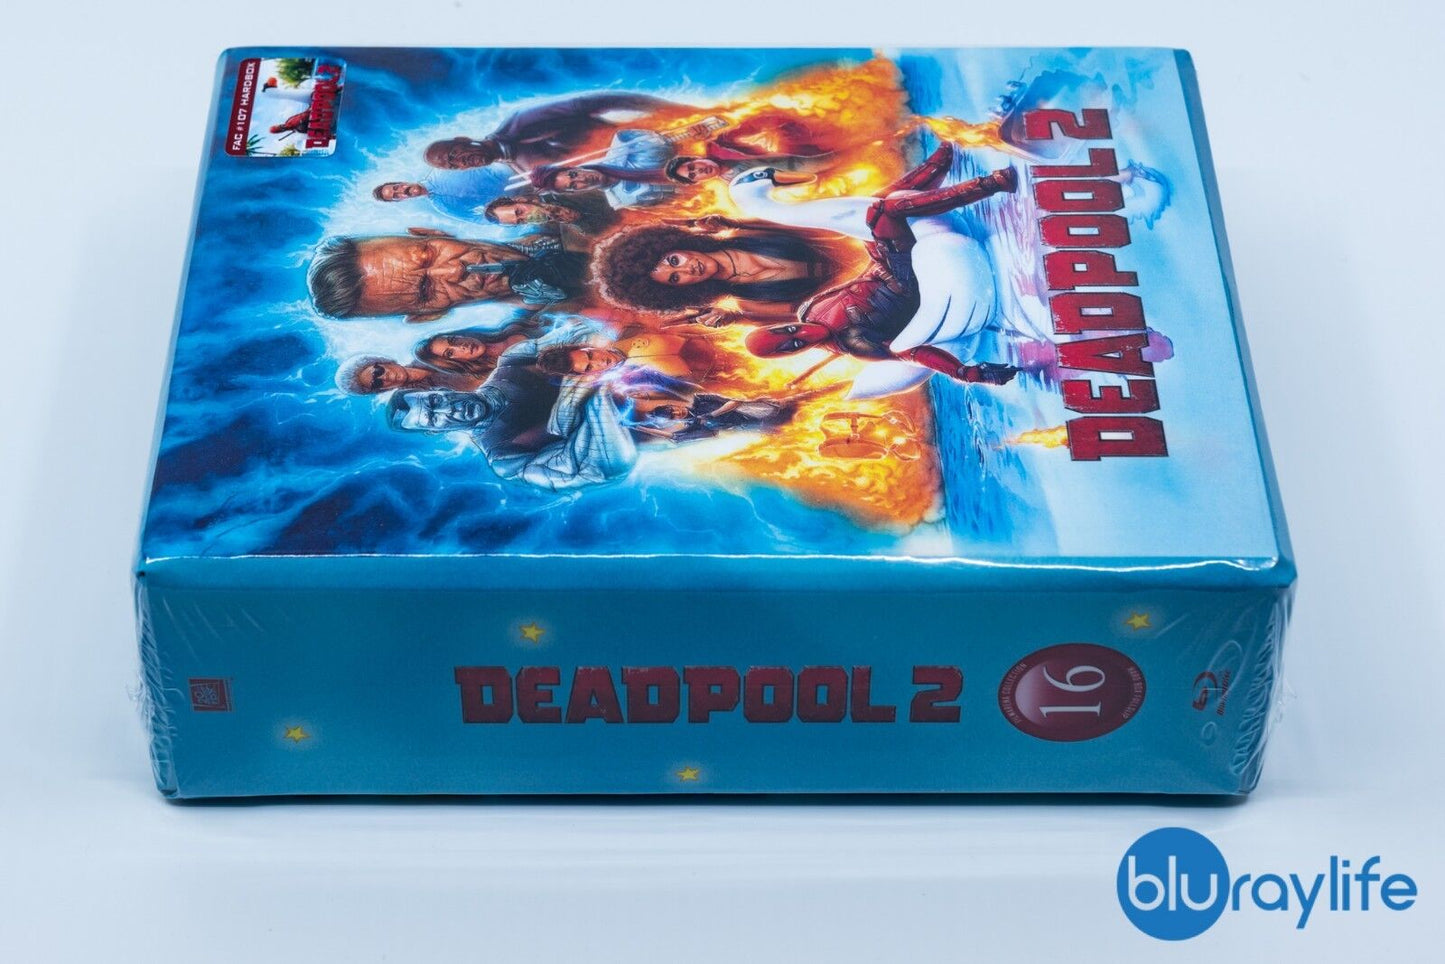 Deadpool 2 4K Blu-ray Steelbook Filmarena Collection #107 Empty Box